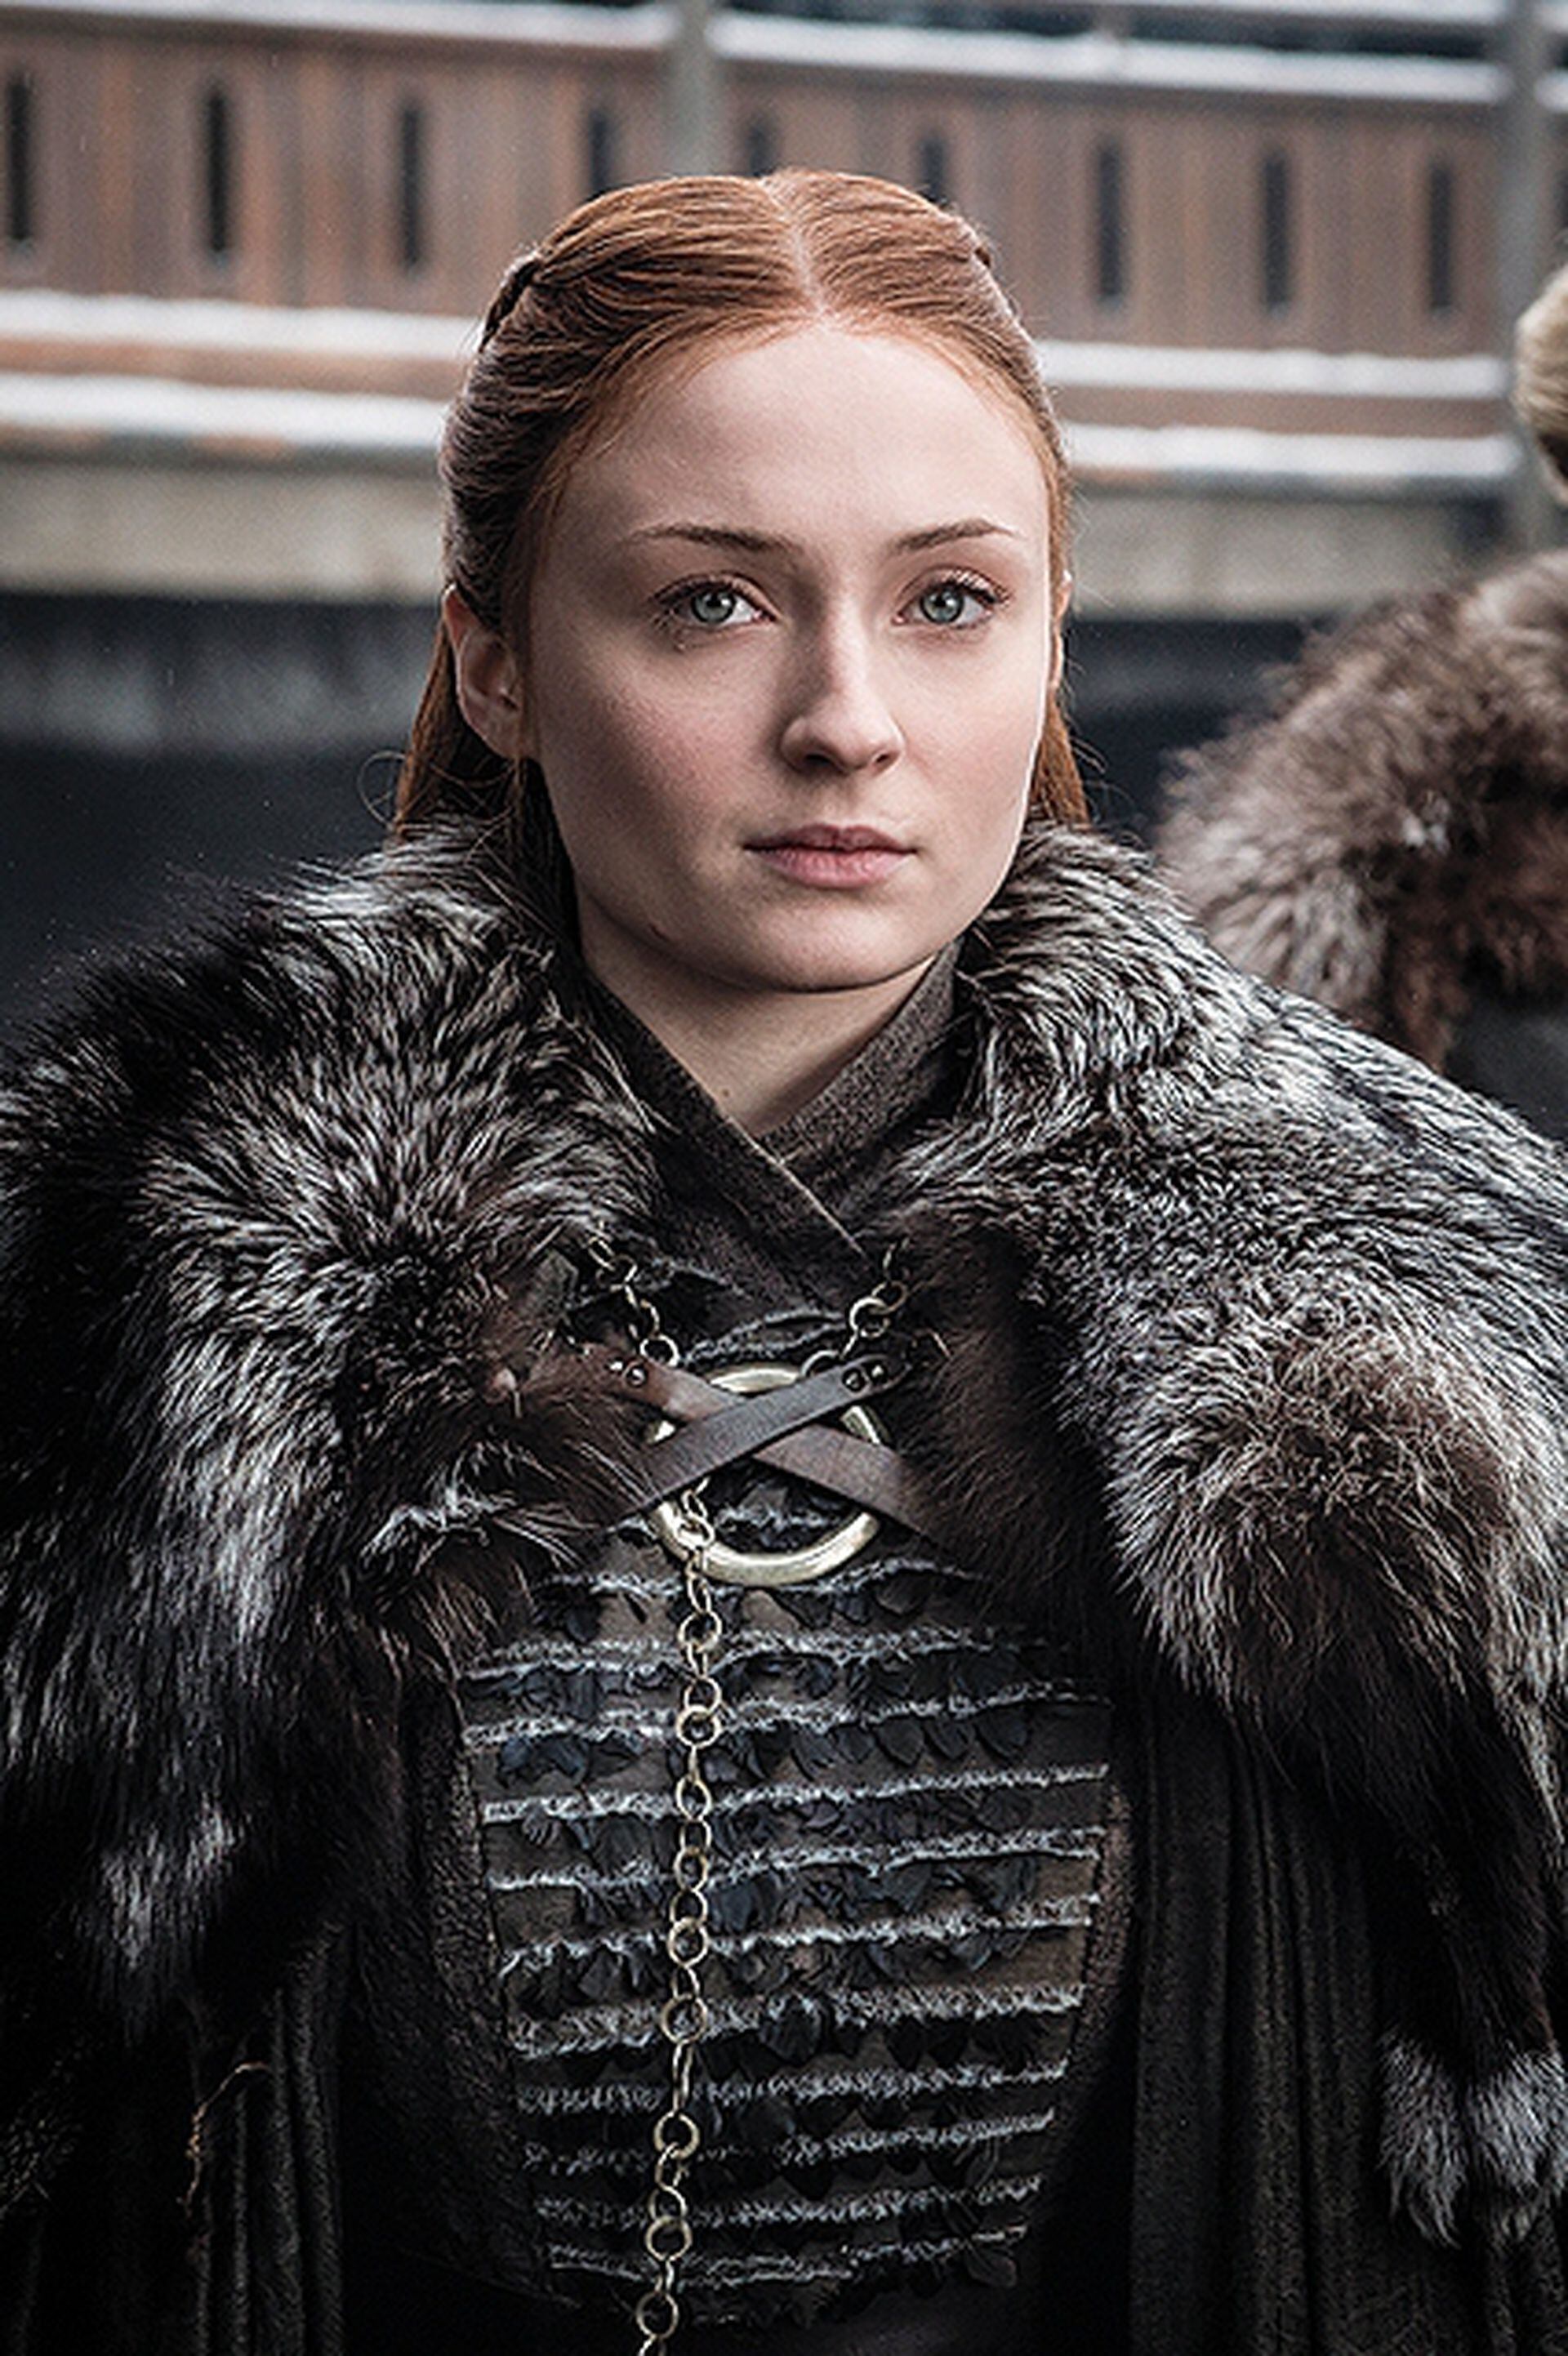 Turner como la reina de Winterfell hacia el final de la serie.